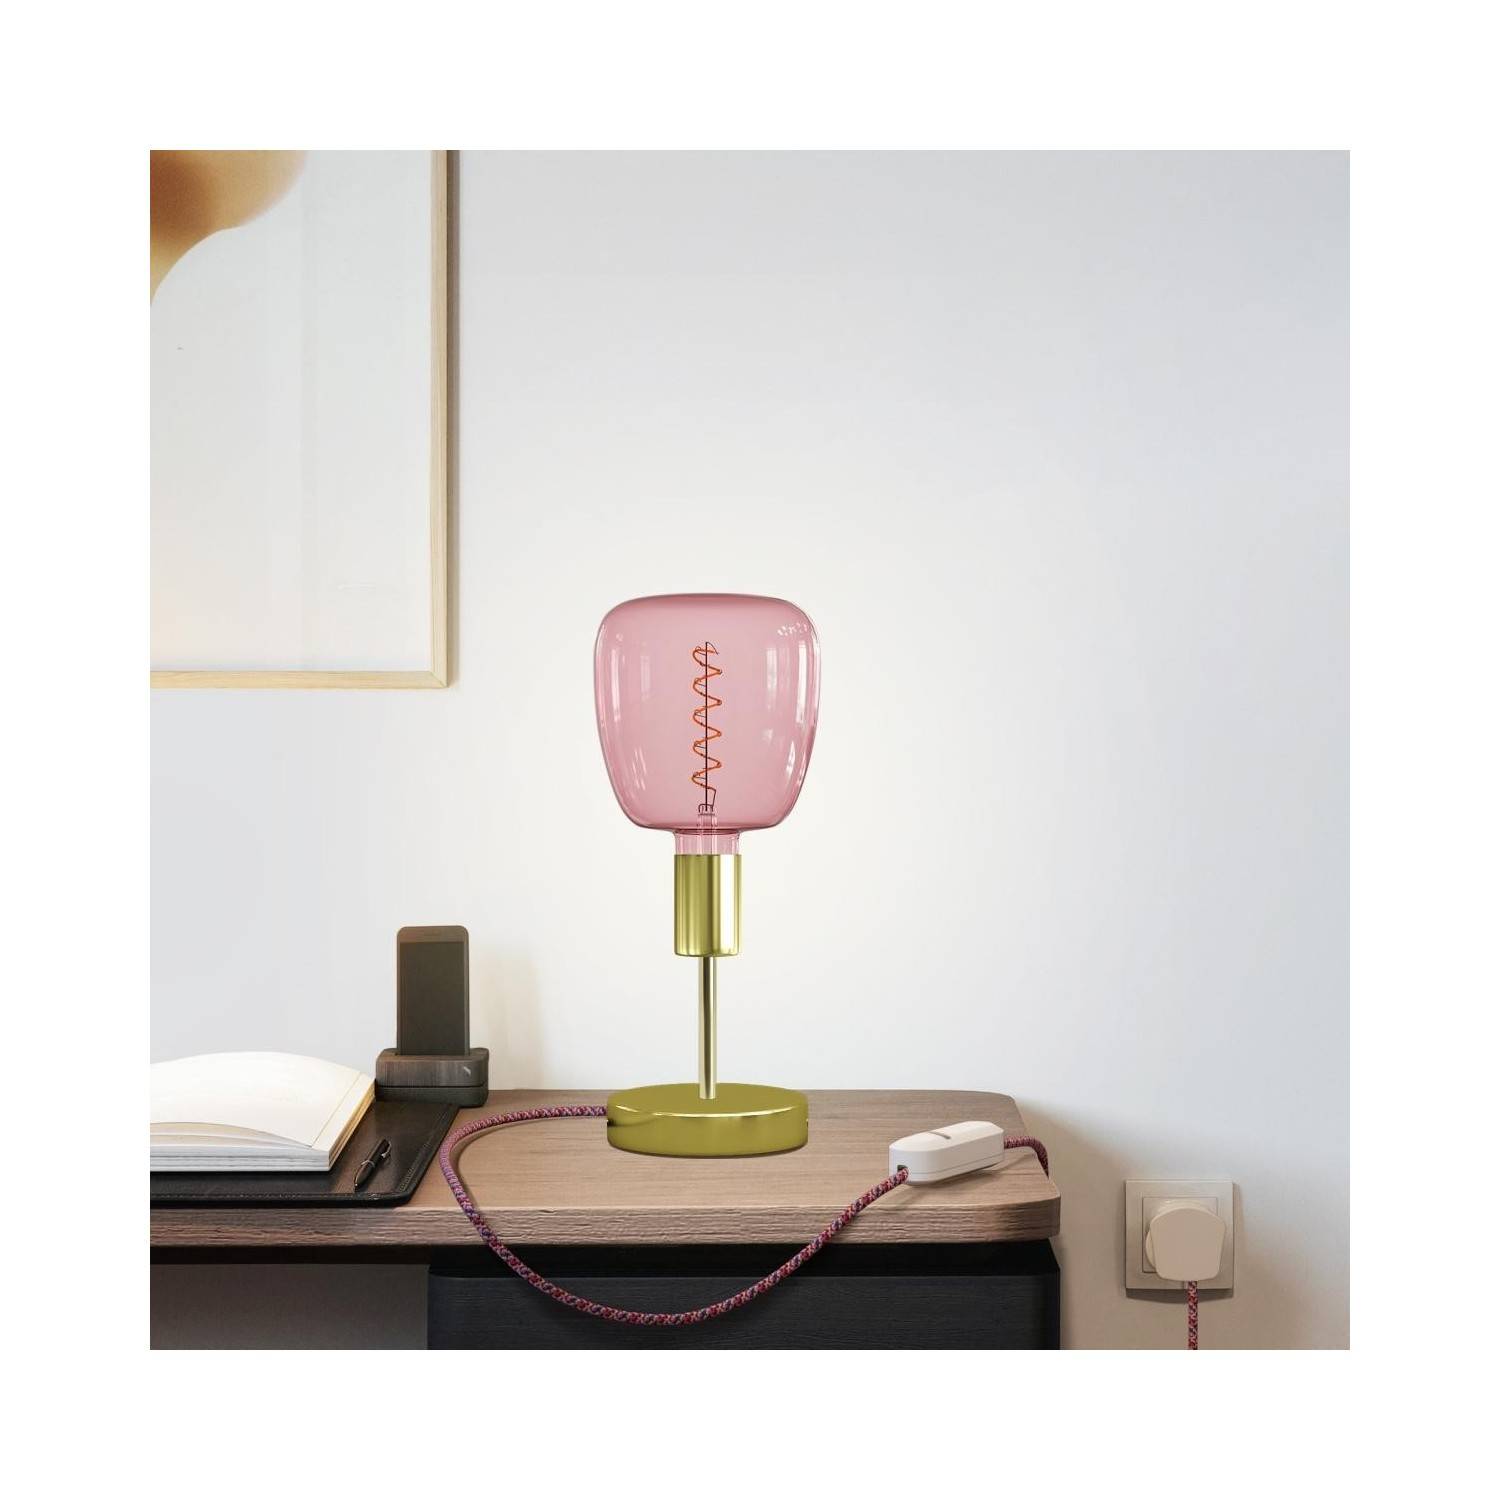 Alzaluce Bona Pastel Metal Table Lamp with UK plug